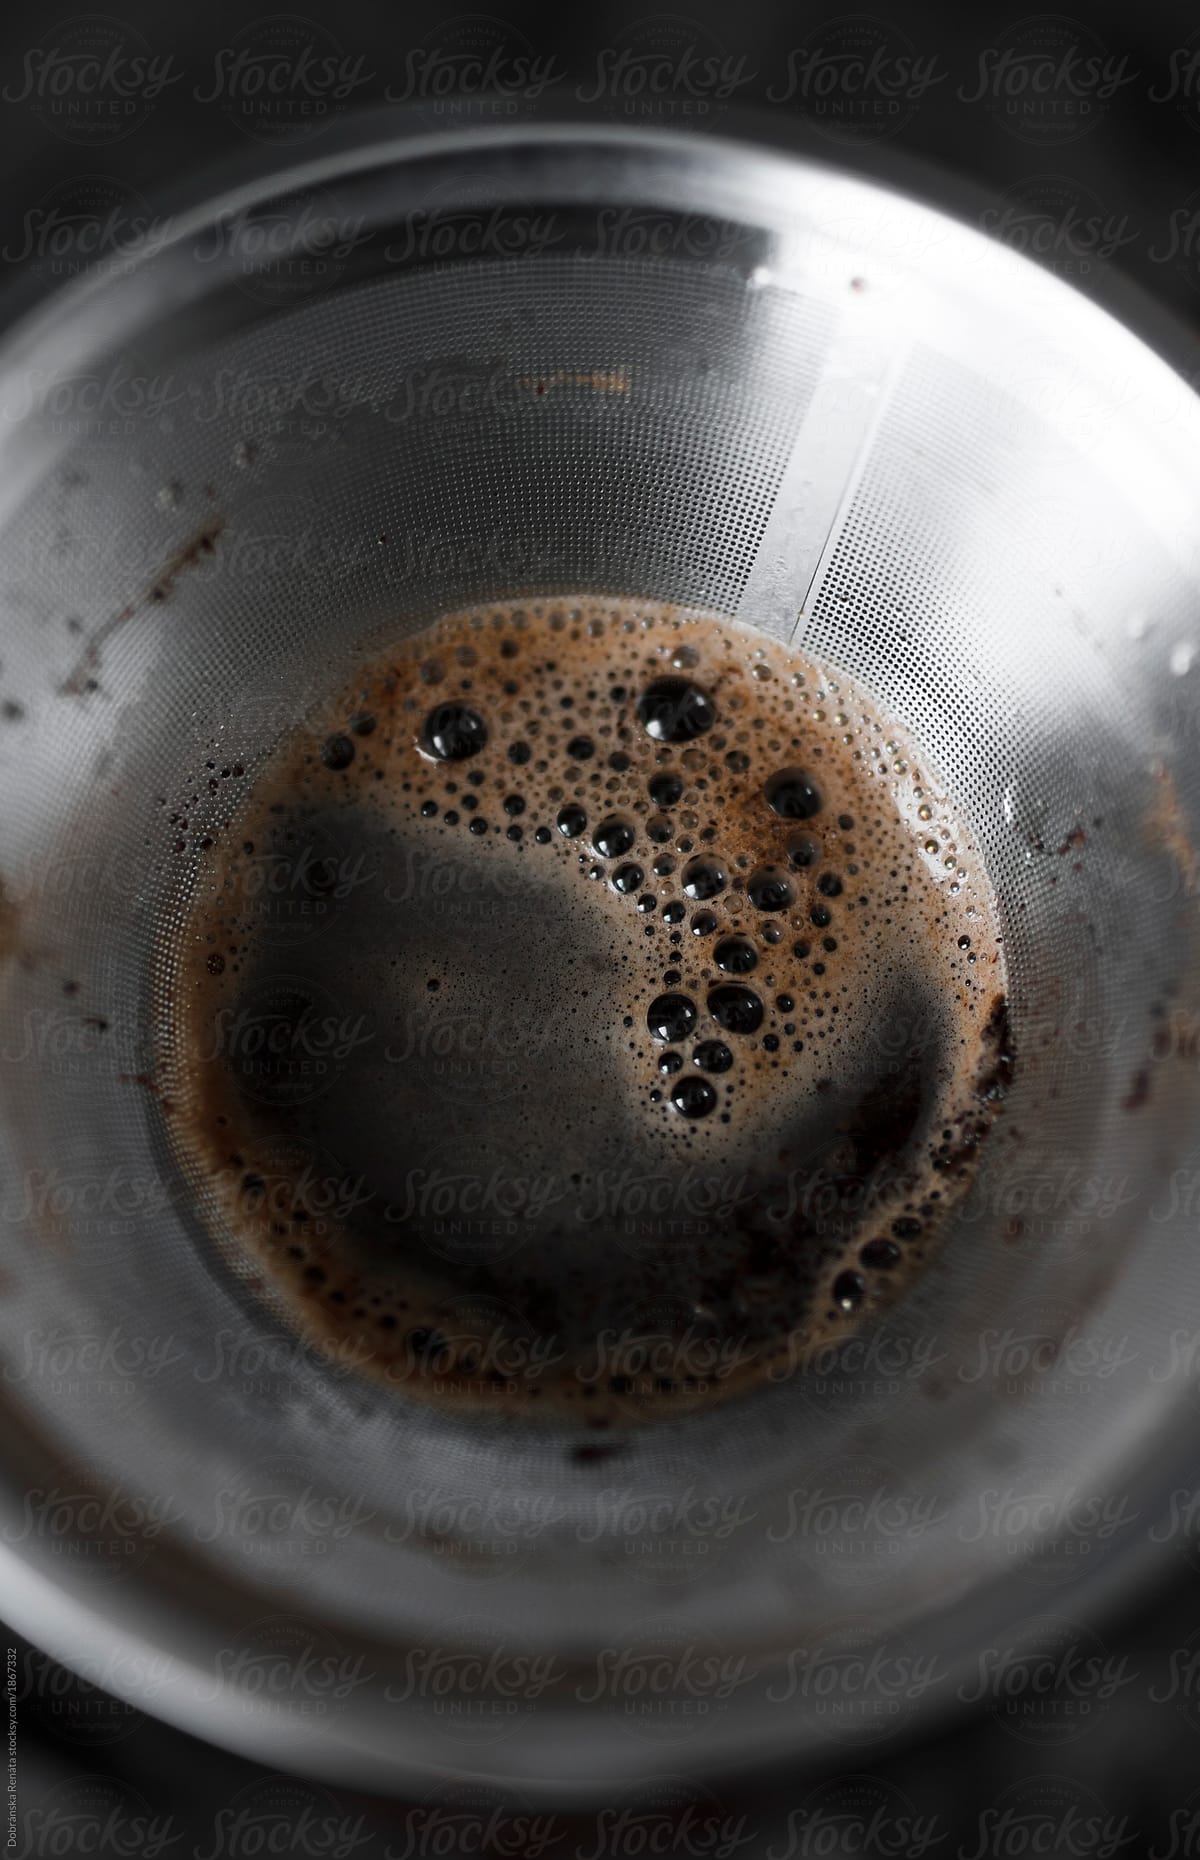 Making filter coffee